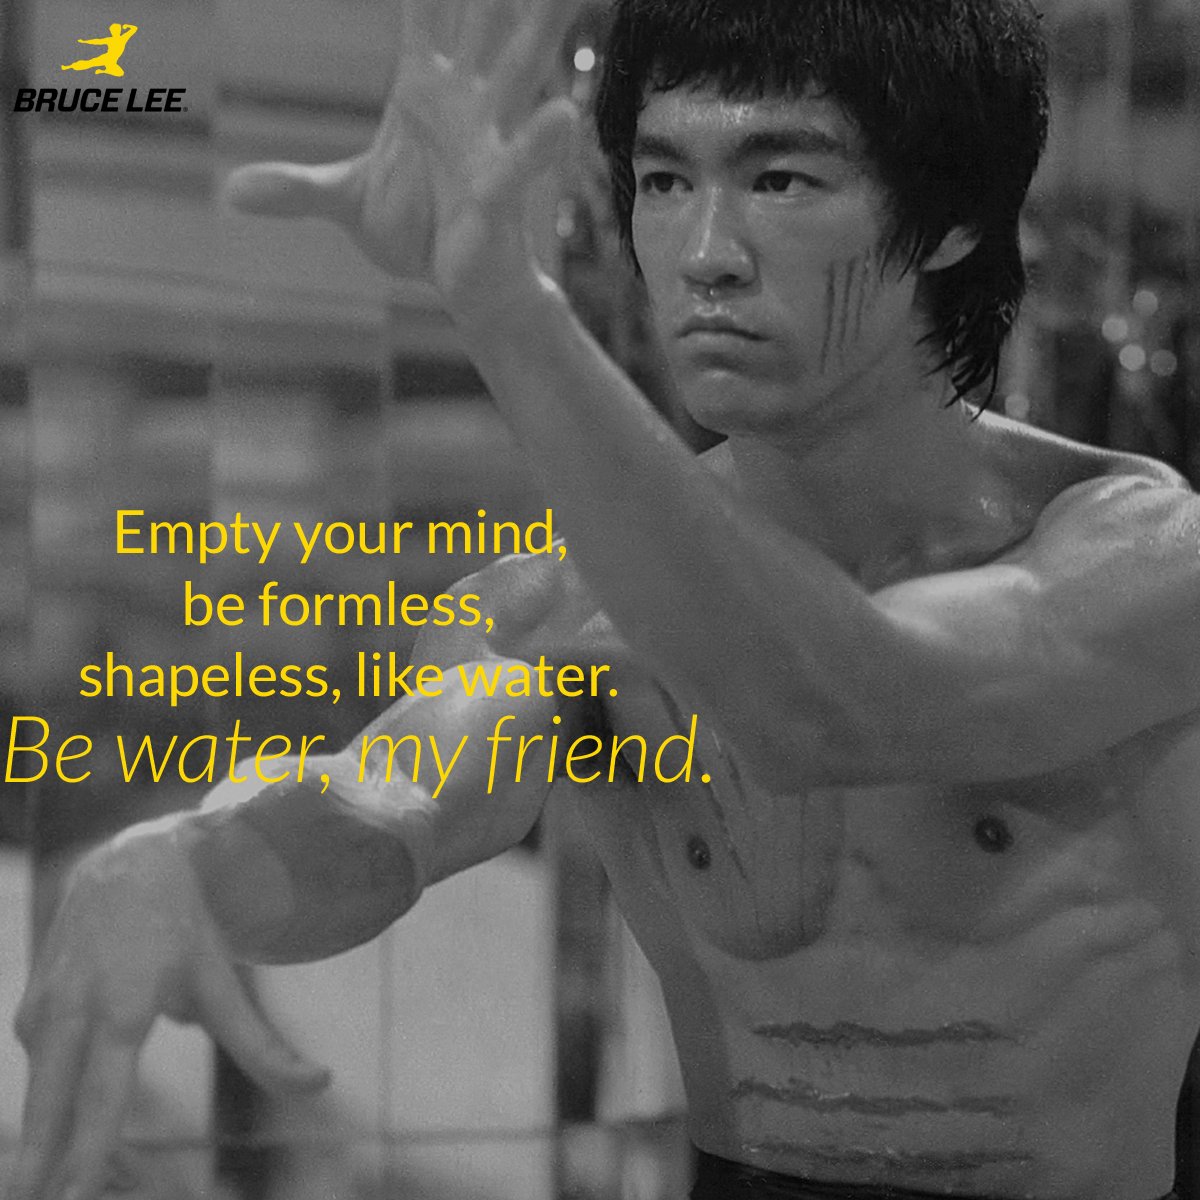 Bruce Lee on Twitter: 